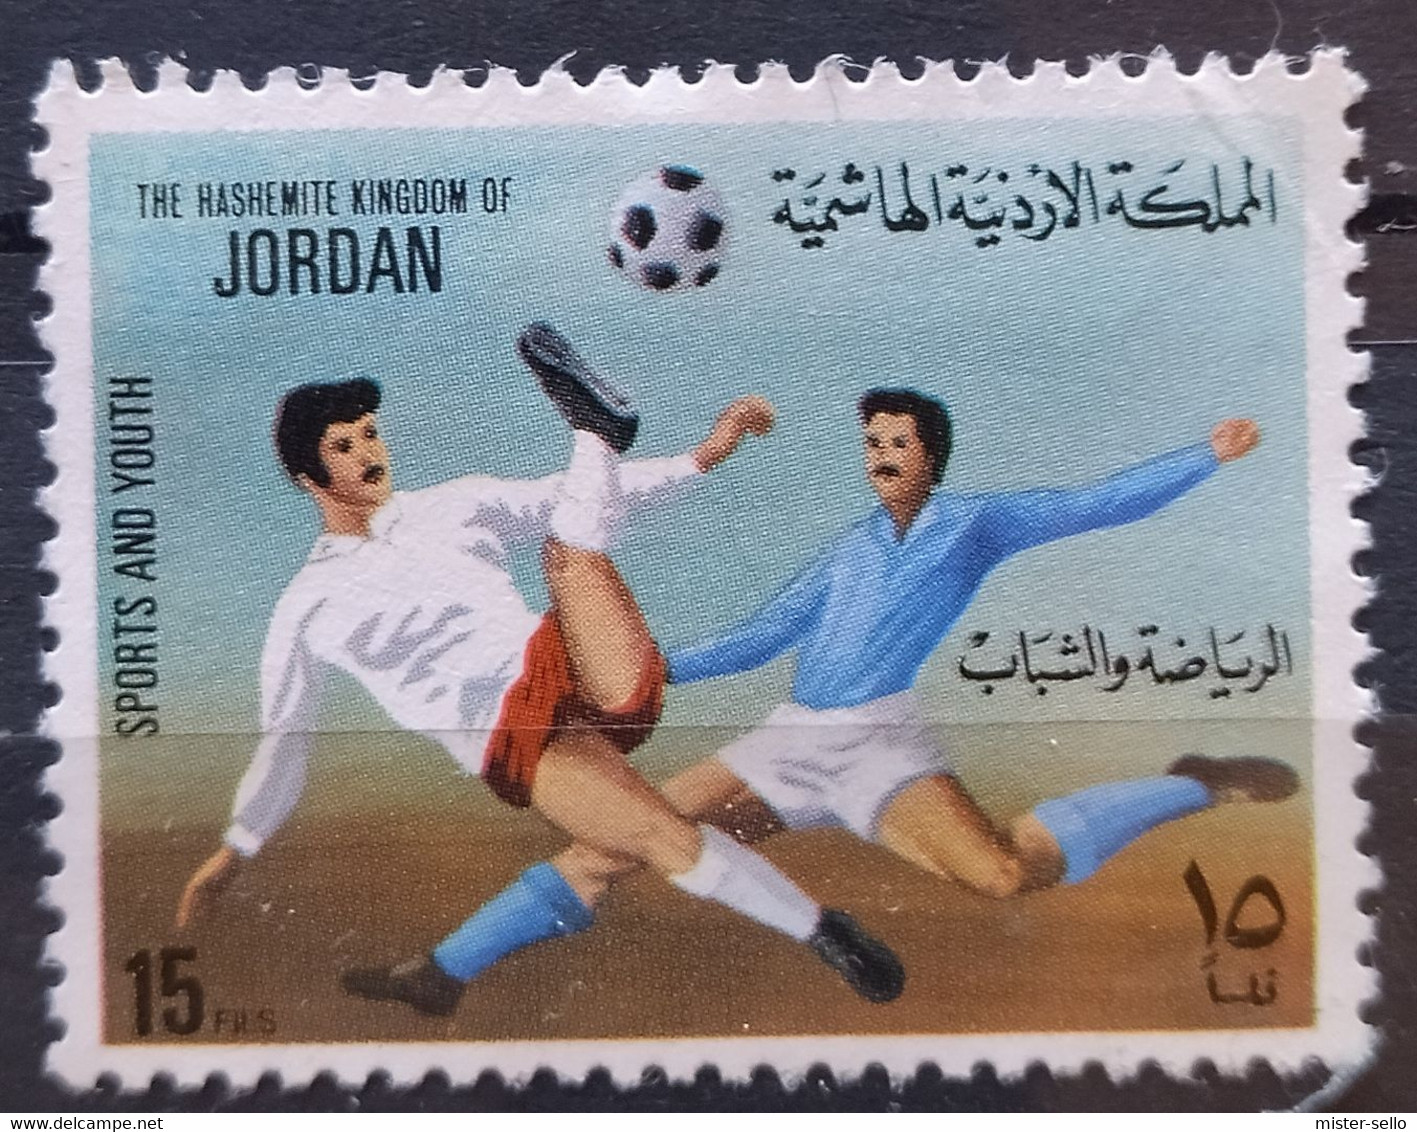 JORDANIA 1976 Sports And Youth. USADO - USED. - Jordanie